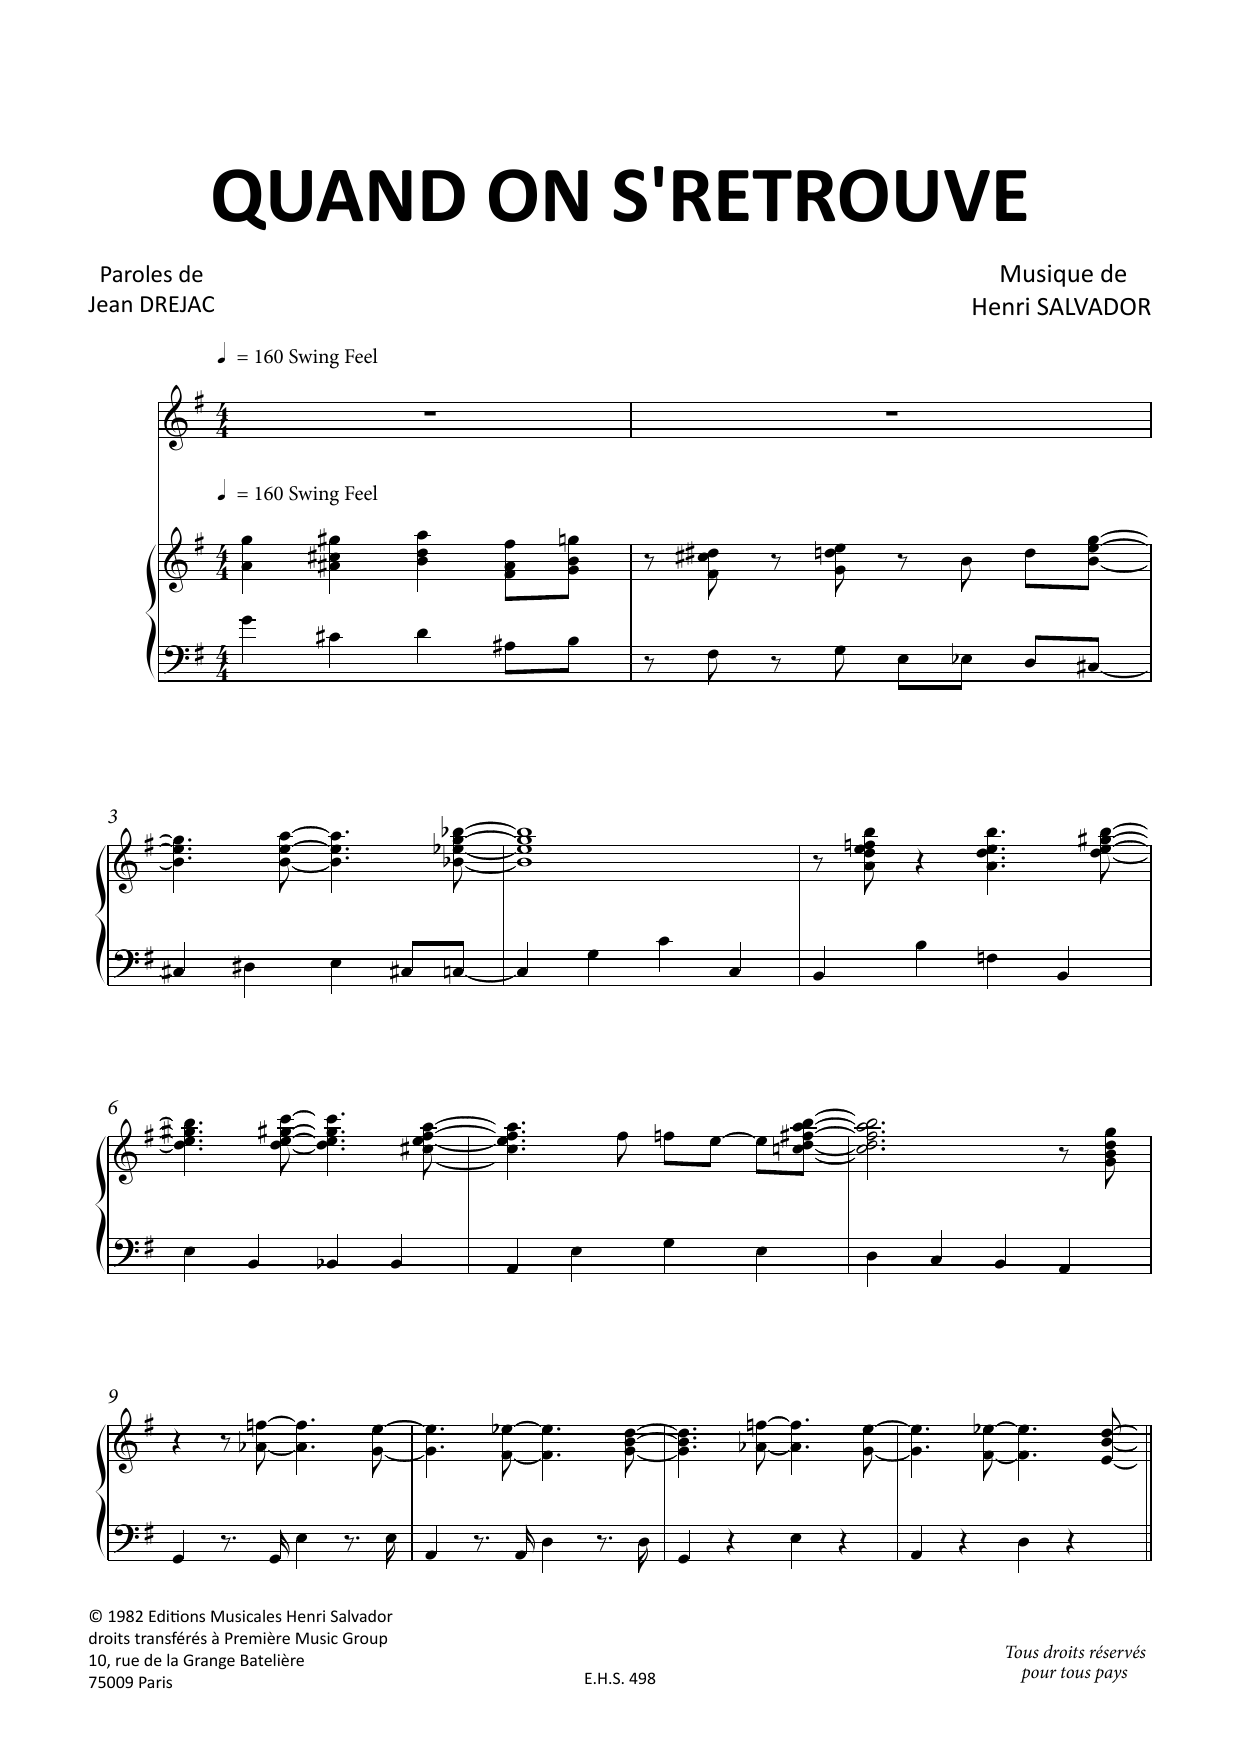 Henri Salvador Quand On Se Retrouve Sheet Music Notes & Chords for Piano & Vocal - Download or Print PDF